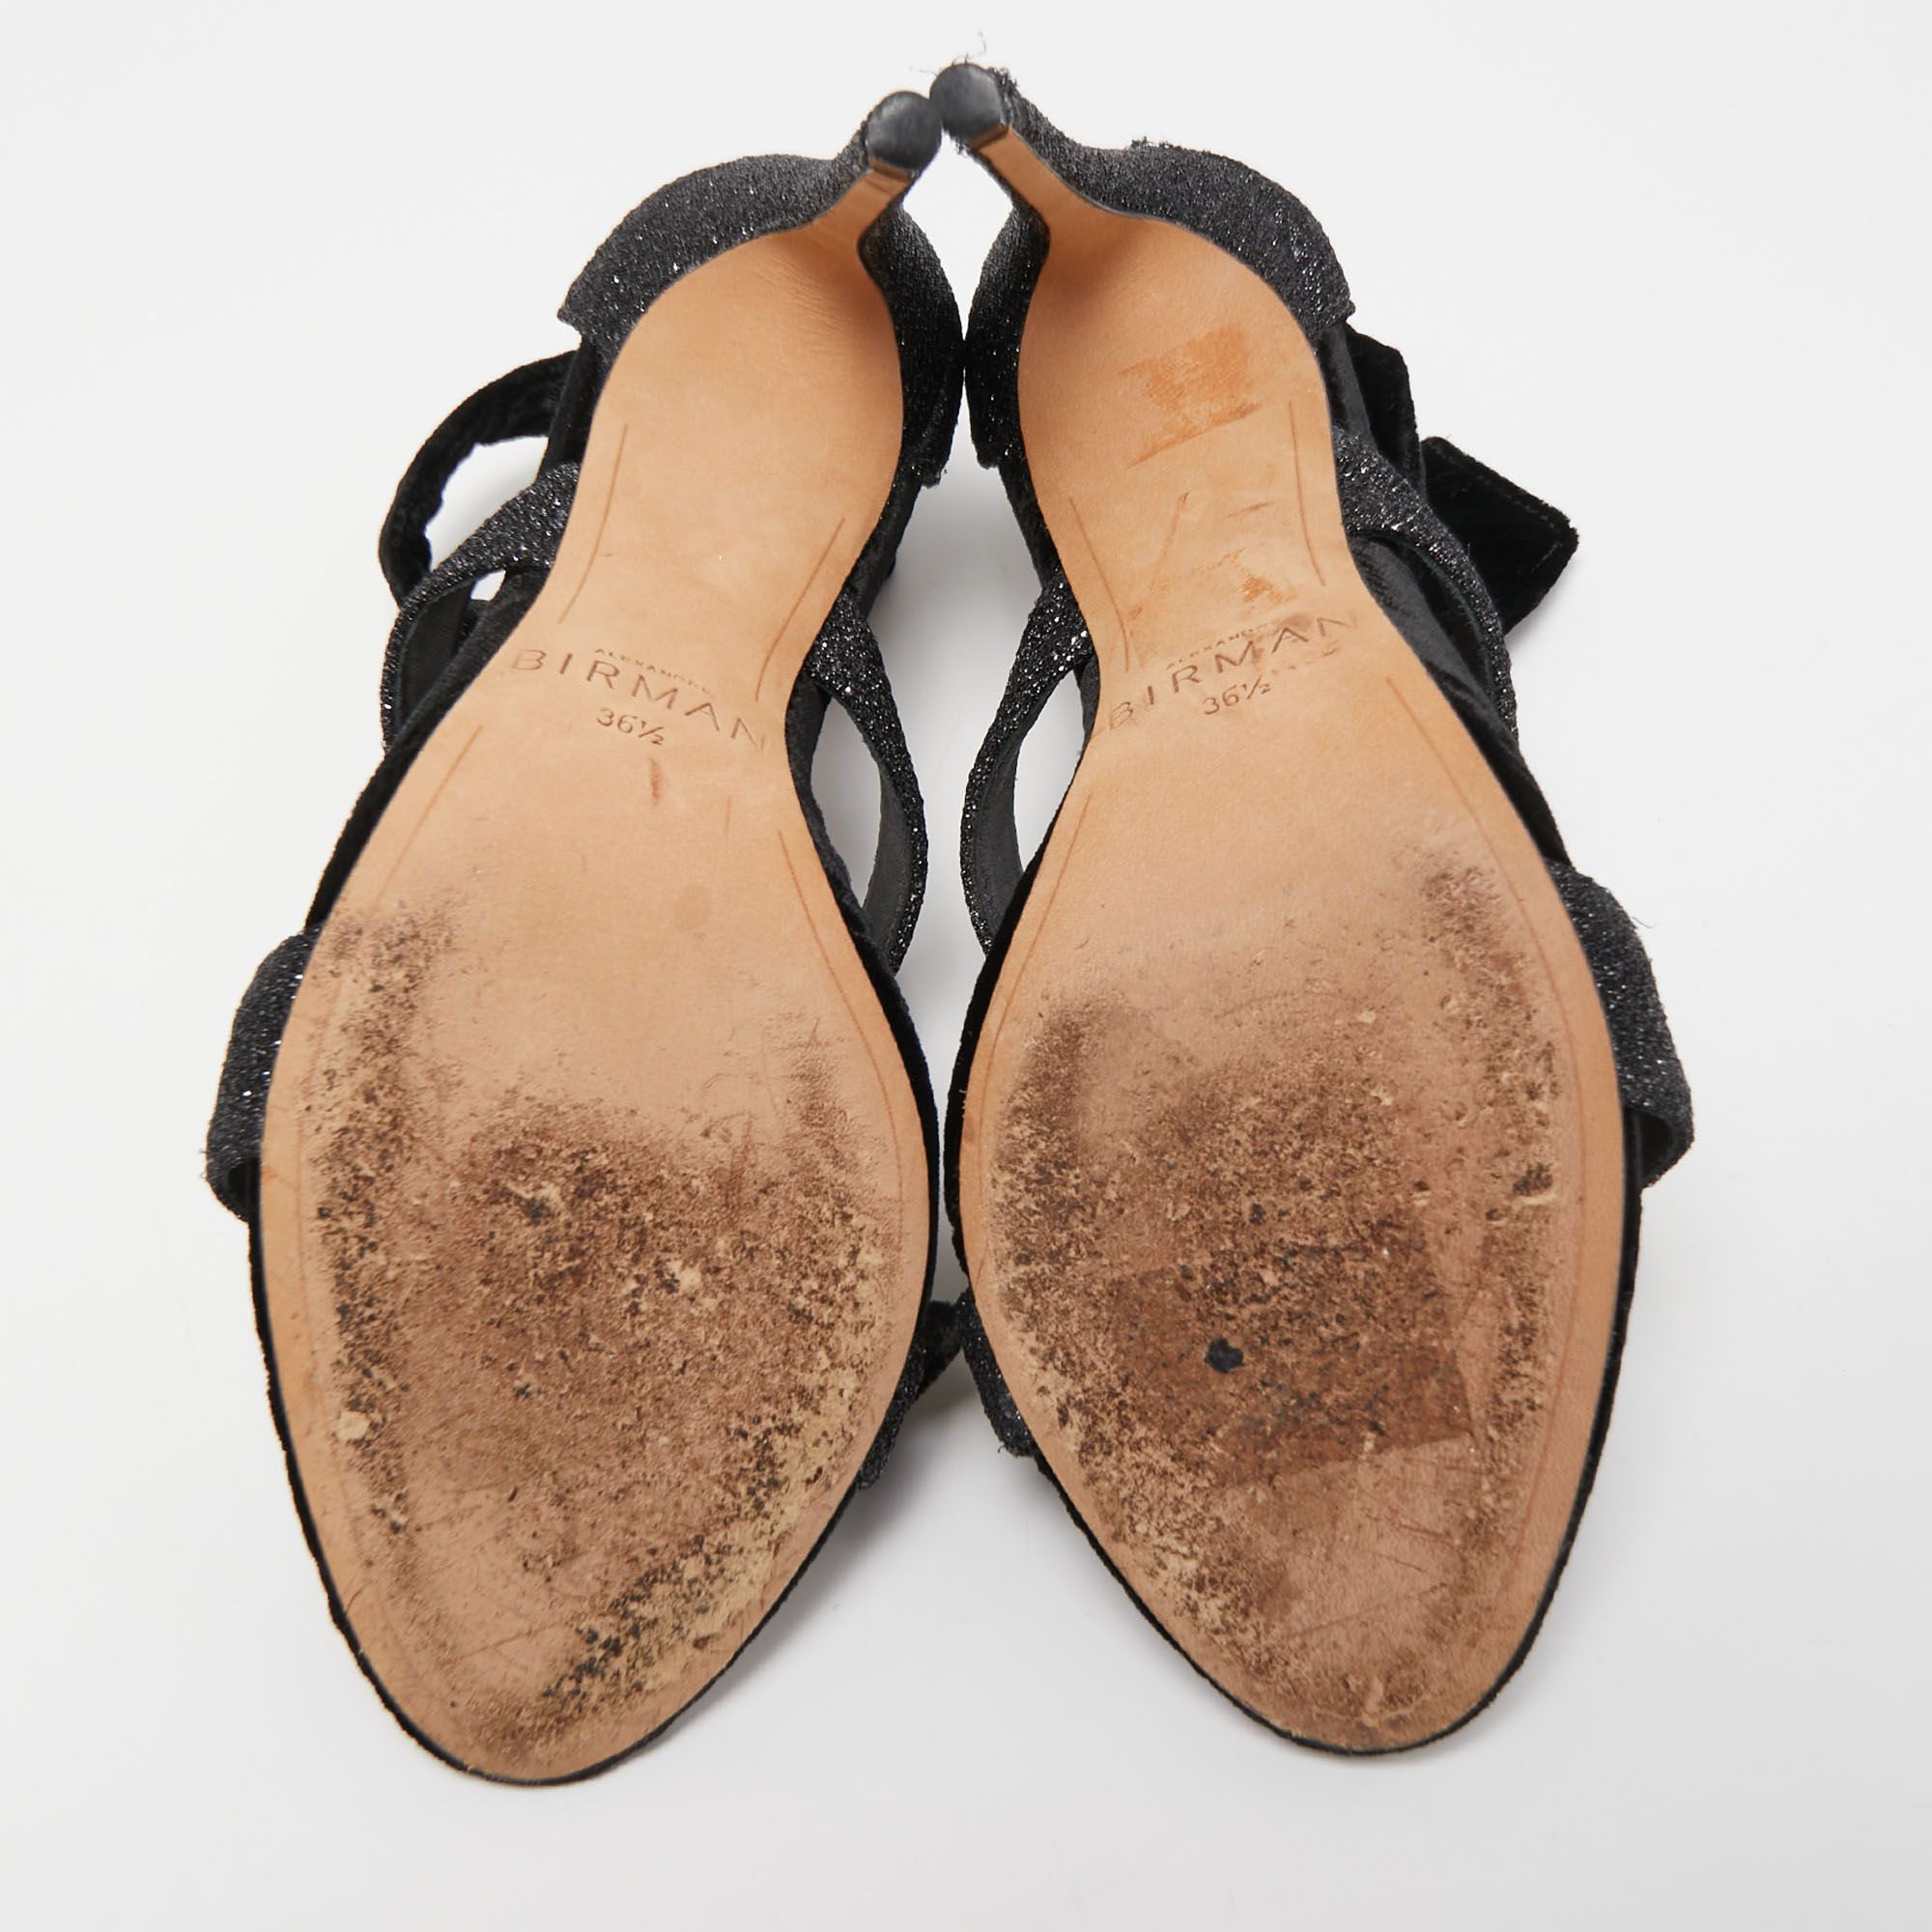 Alexandre Birman Black Velvet And Glitter Tripple Knot Lolita Sandals Size 36.5